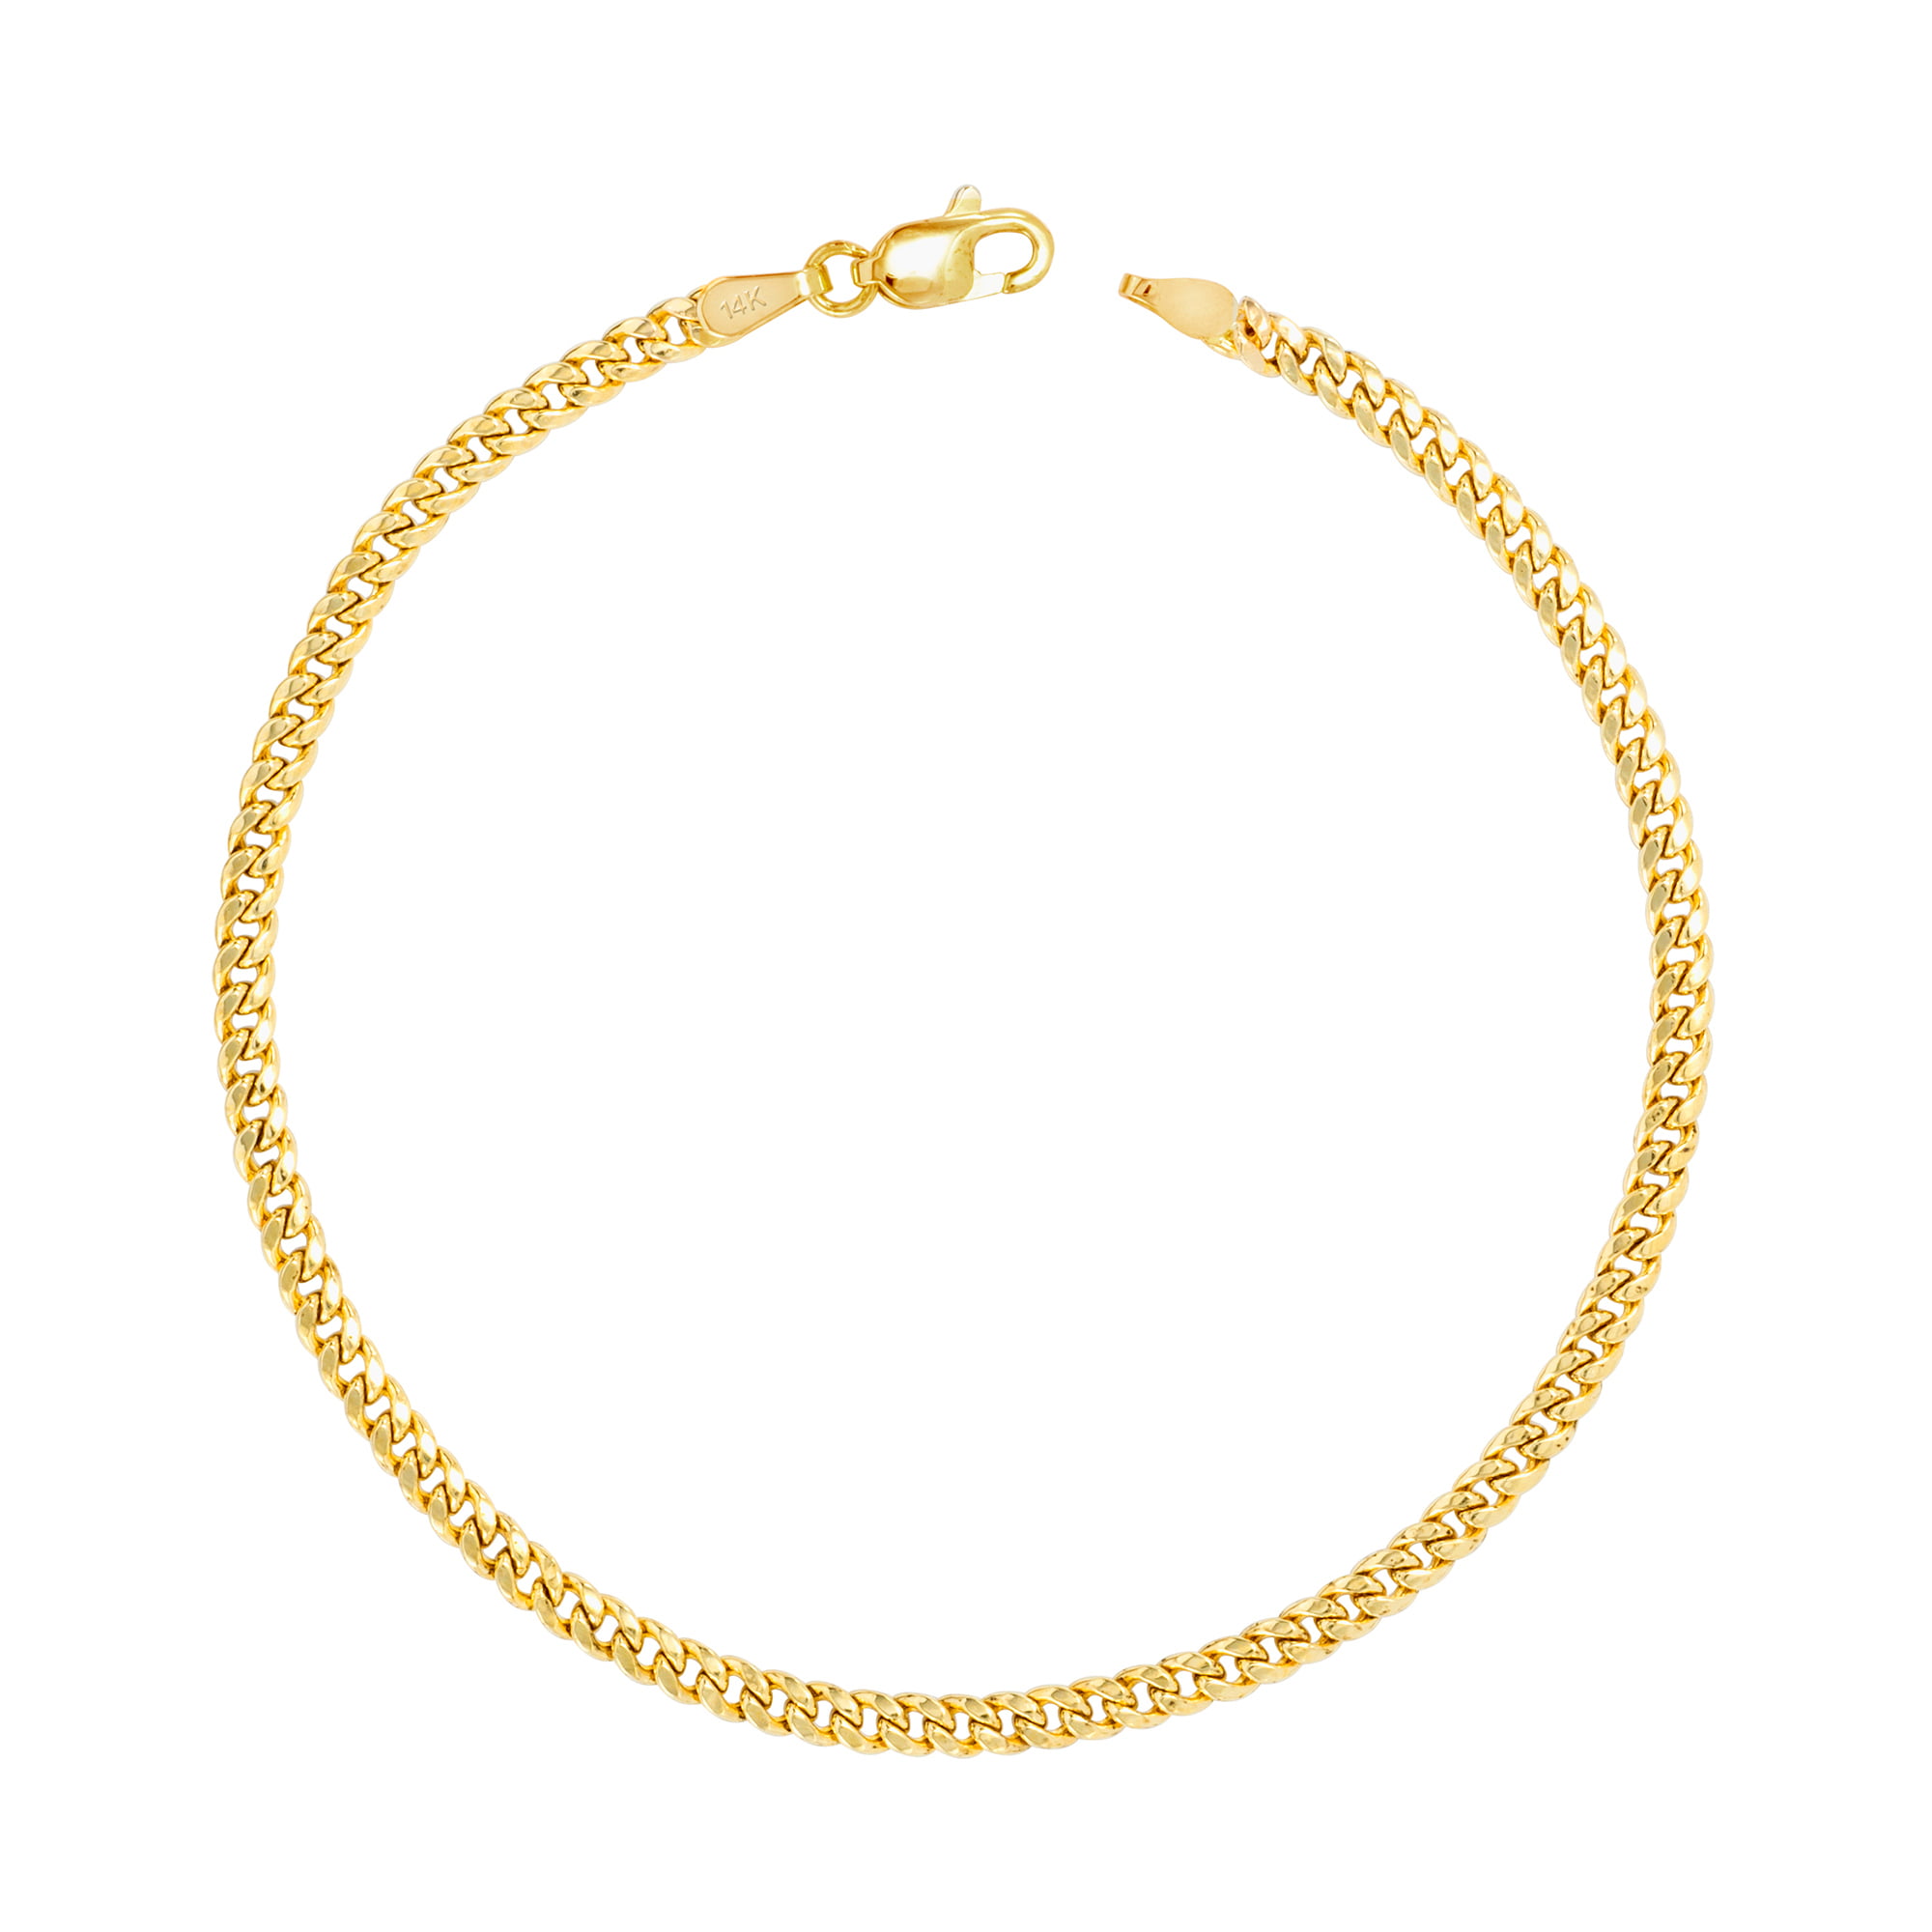 Nuragold - 14K Yellow Gold 3mm Miami Cuban Link Chain Bracelet, 7